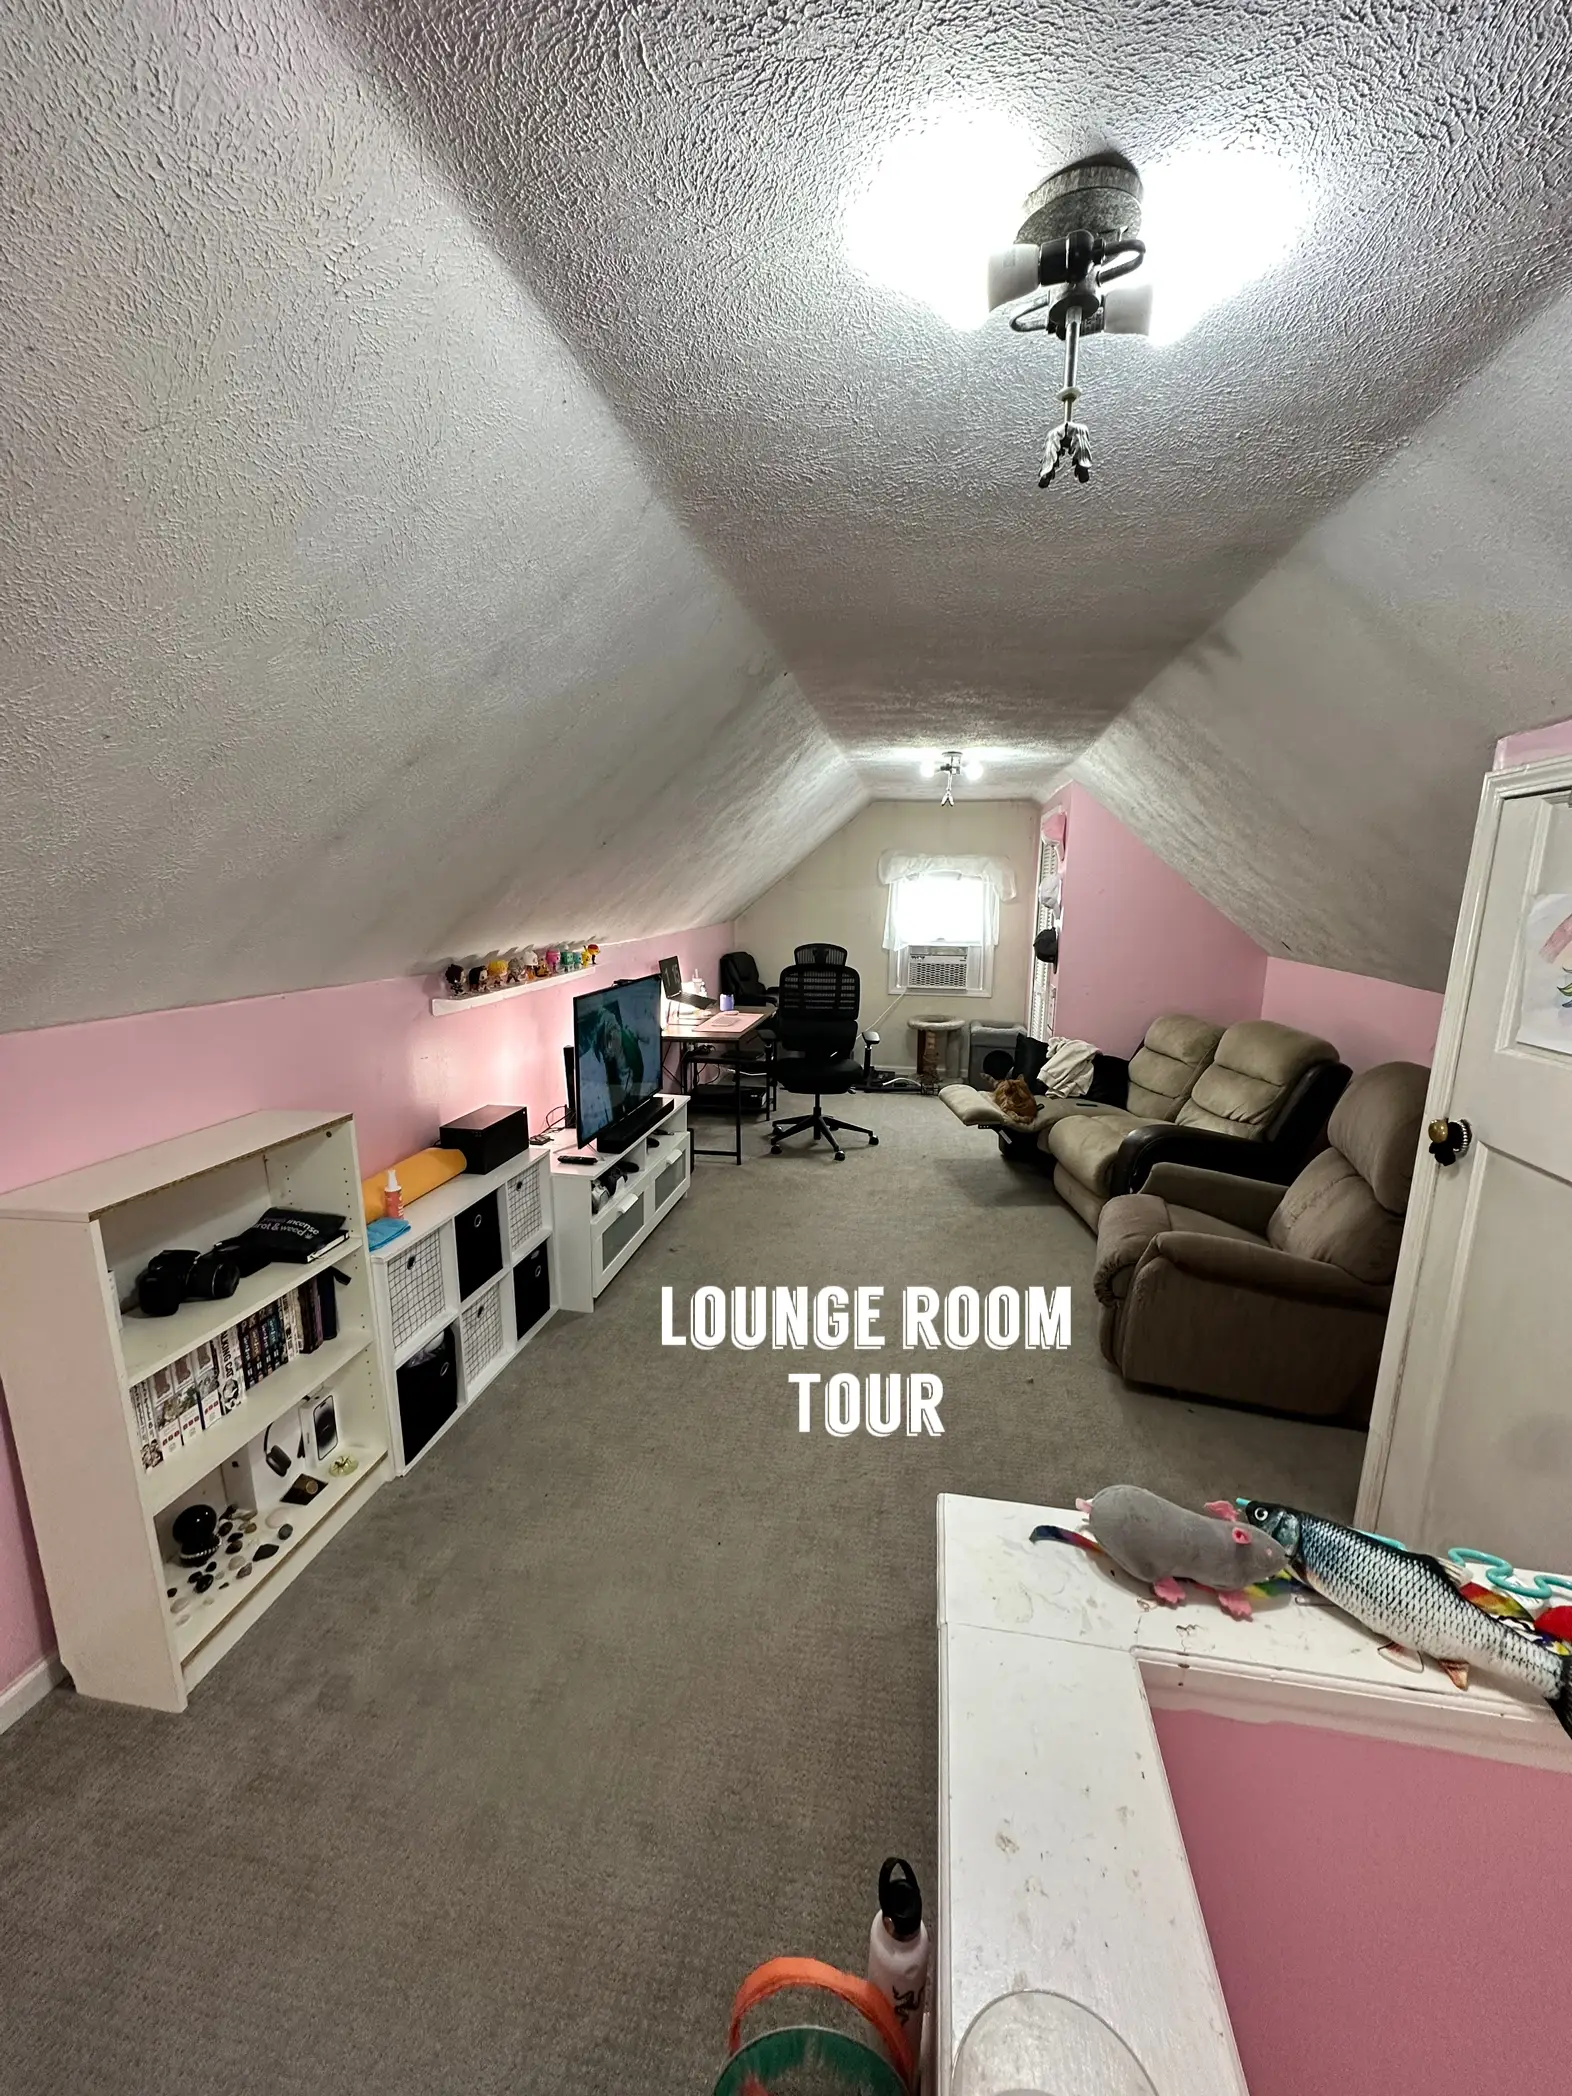 Dark coquette room decor design and idea  Room inspiration bedroom, Room  makeover inspiration, Room